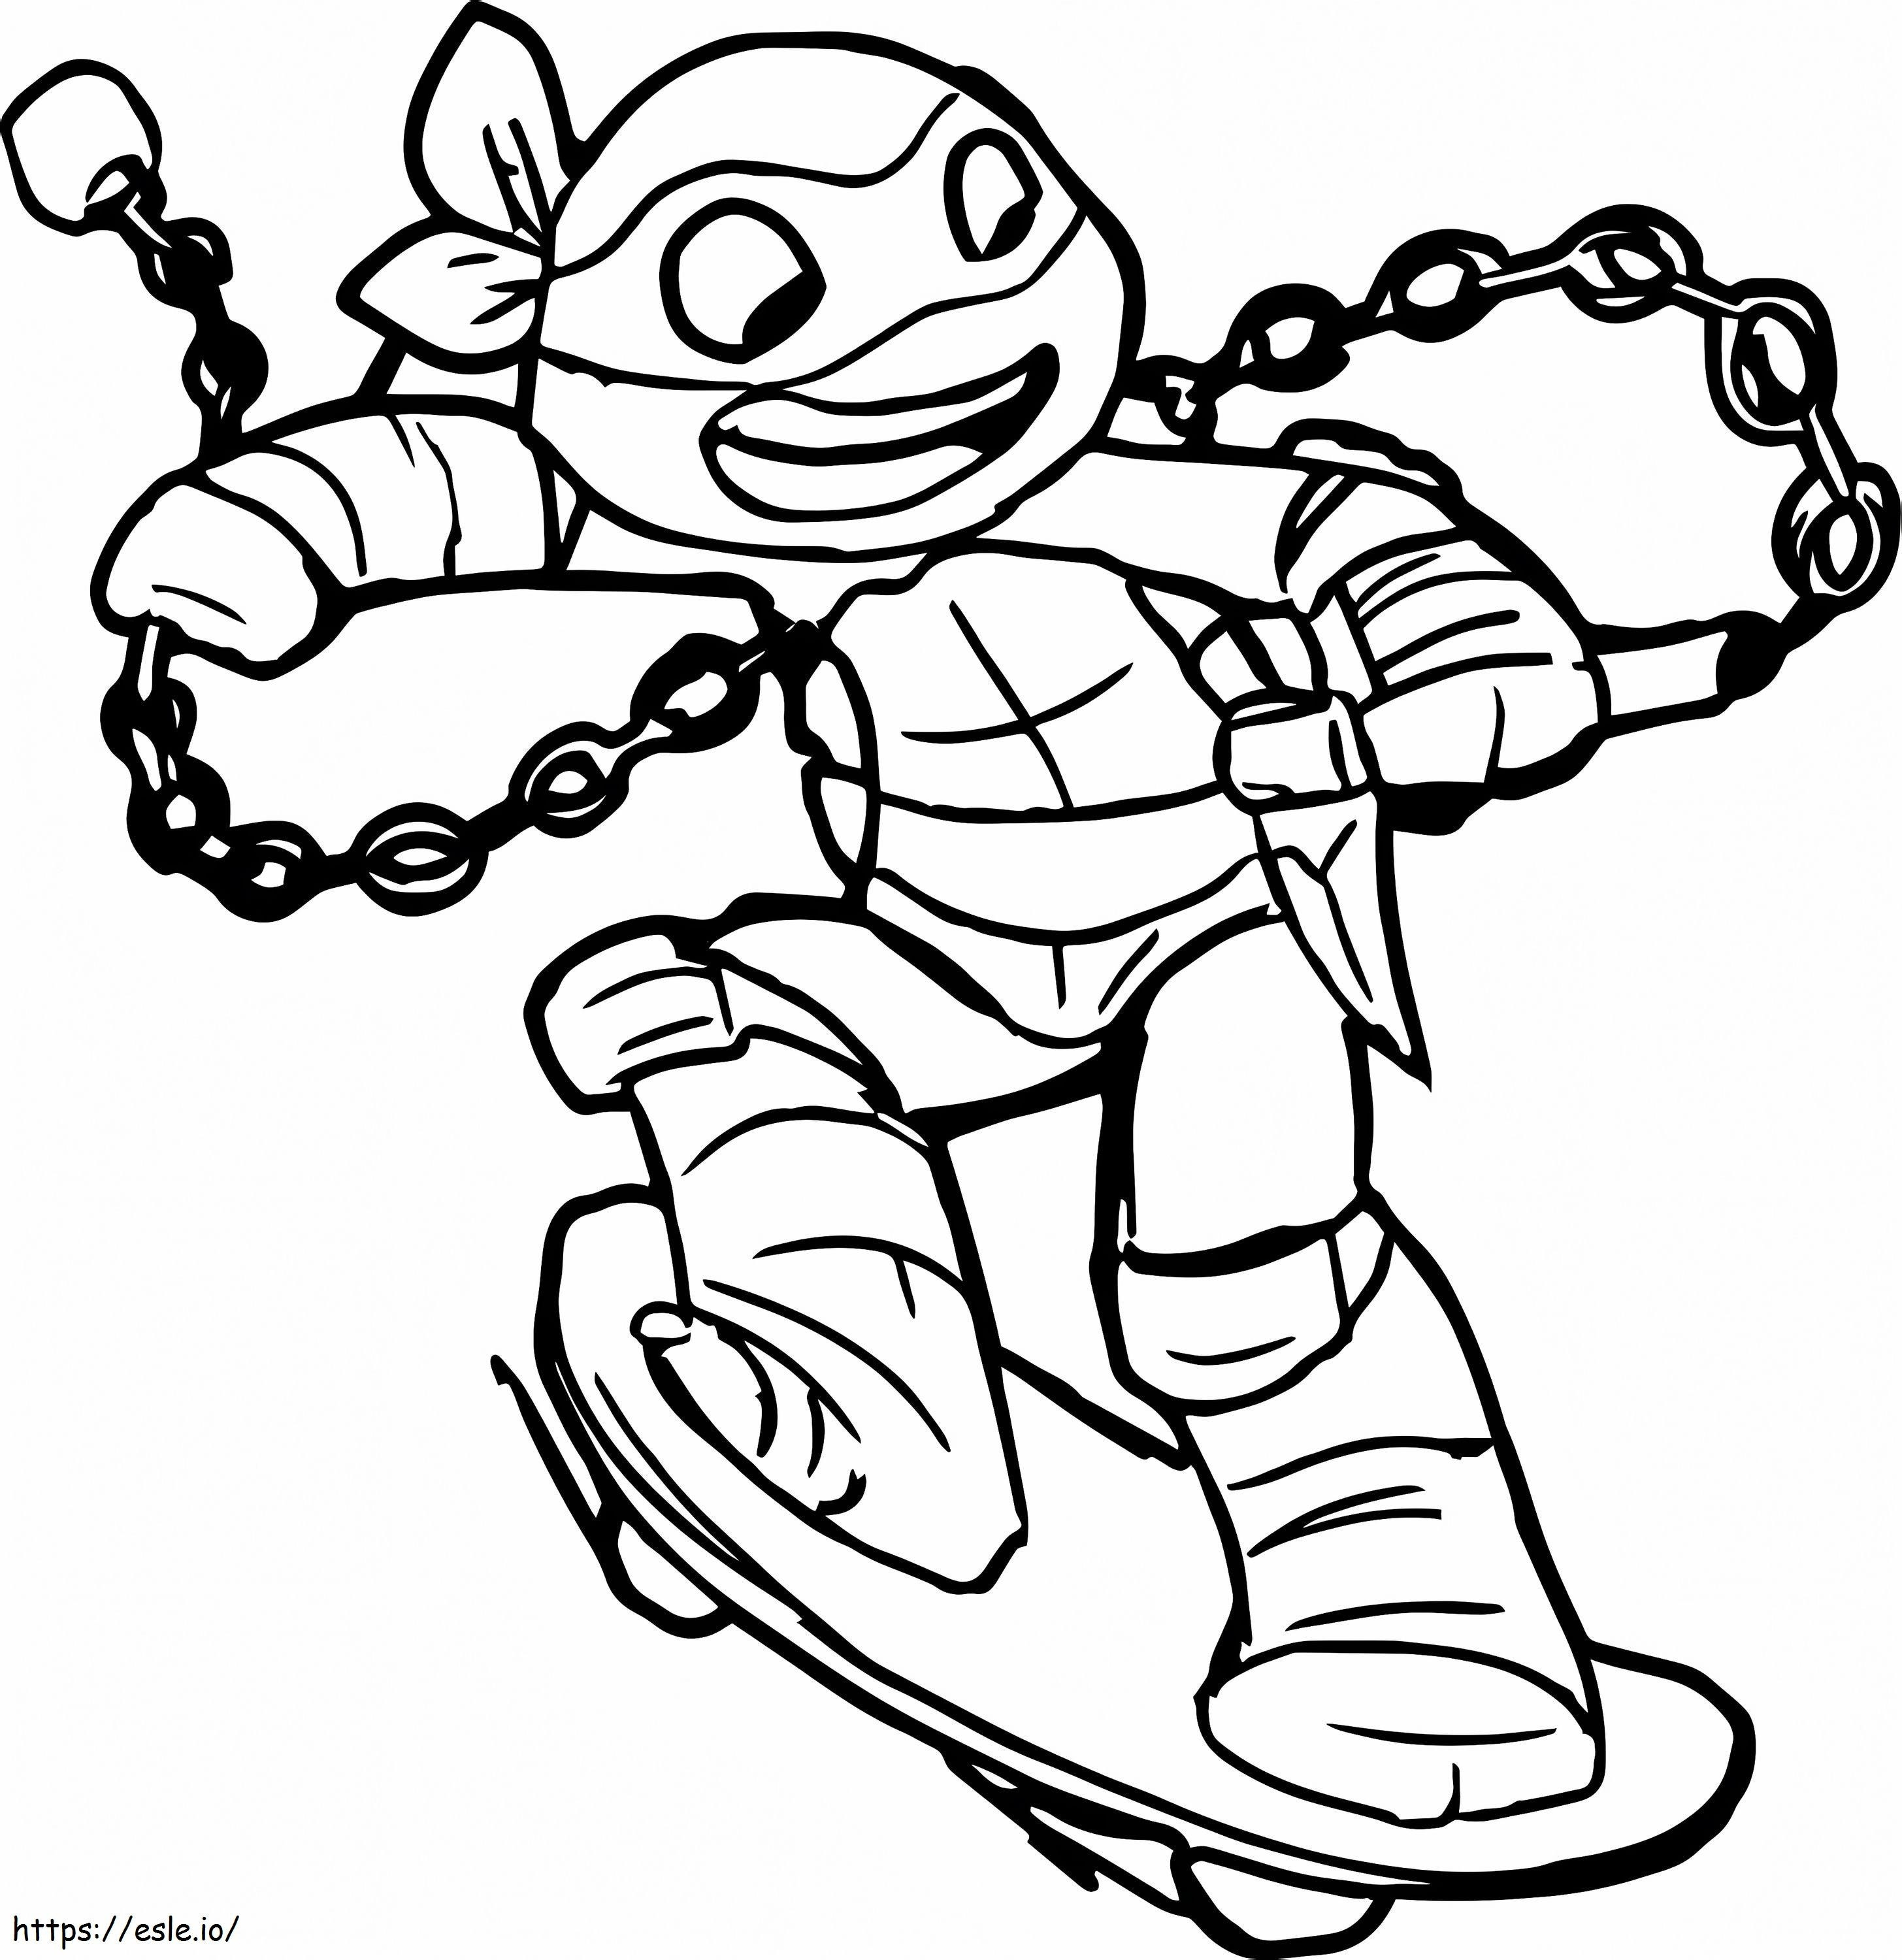 1532140232 Tortuga Ninja Skateboarding A4 para colorear